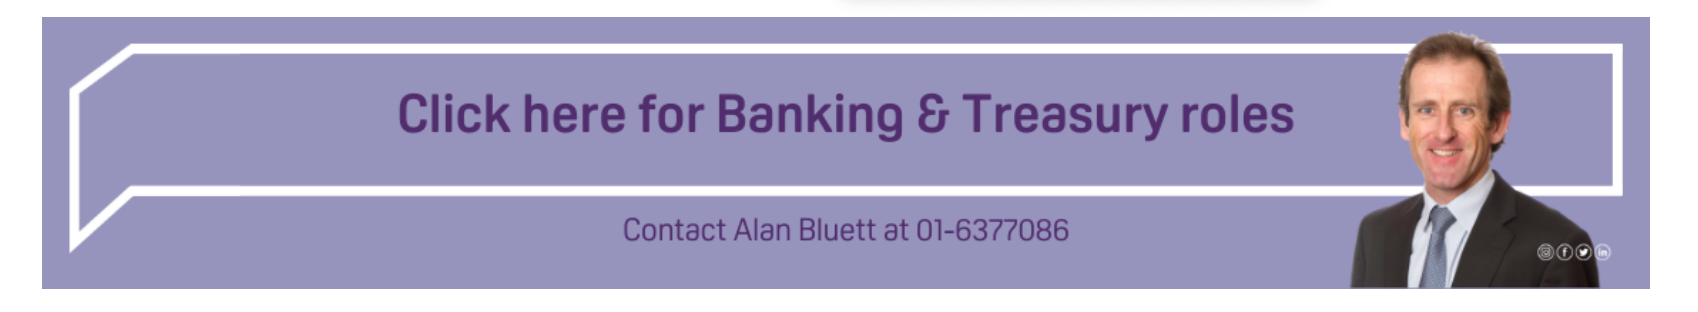 banking & treasury roles